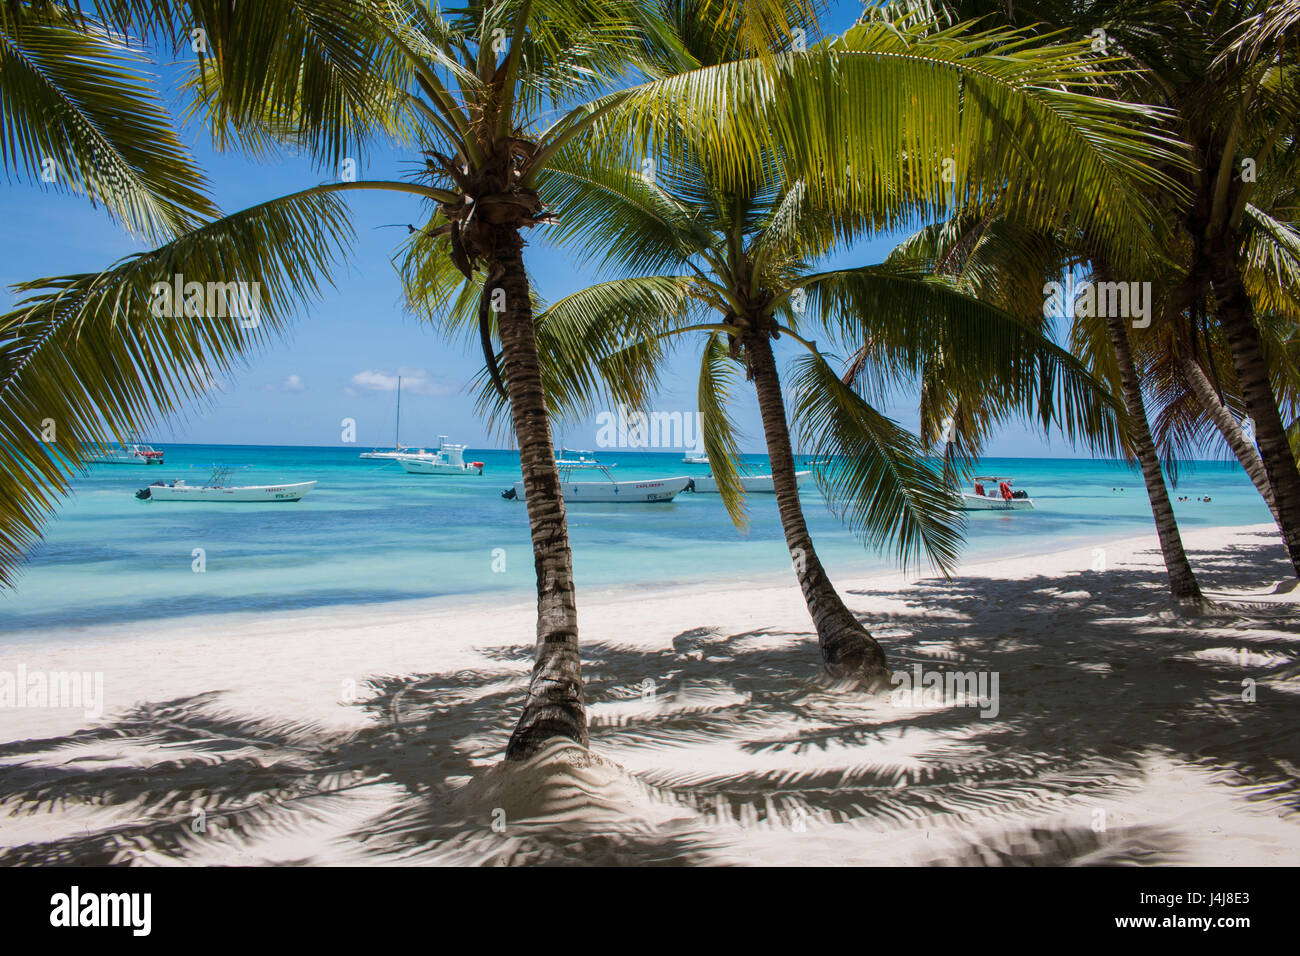 Palm trees on the saona island in the caribbean. Stock Photo